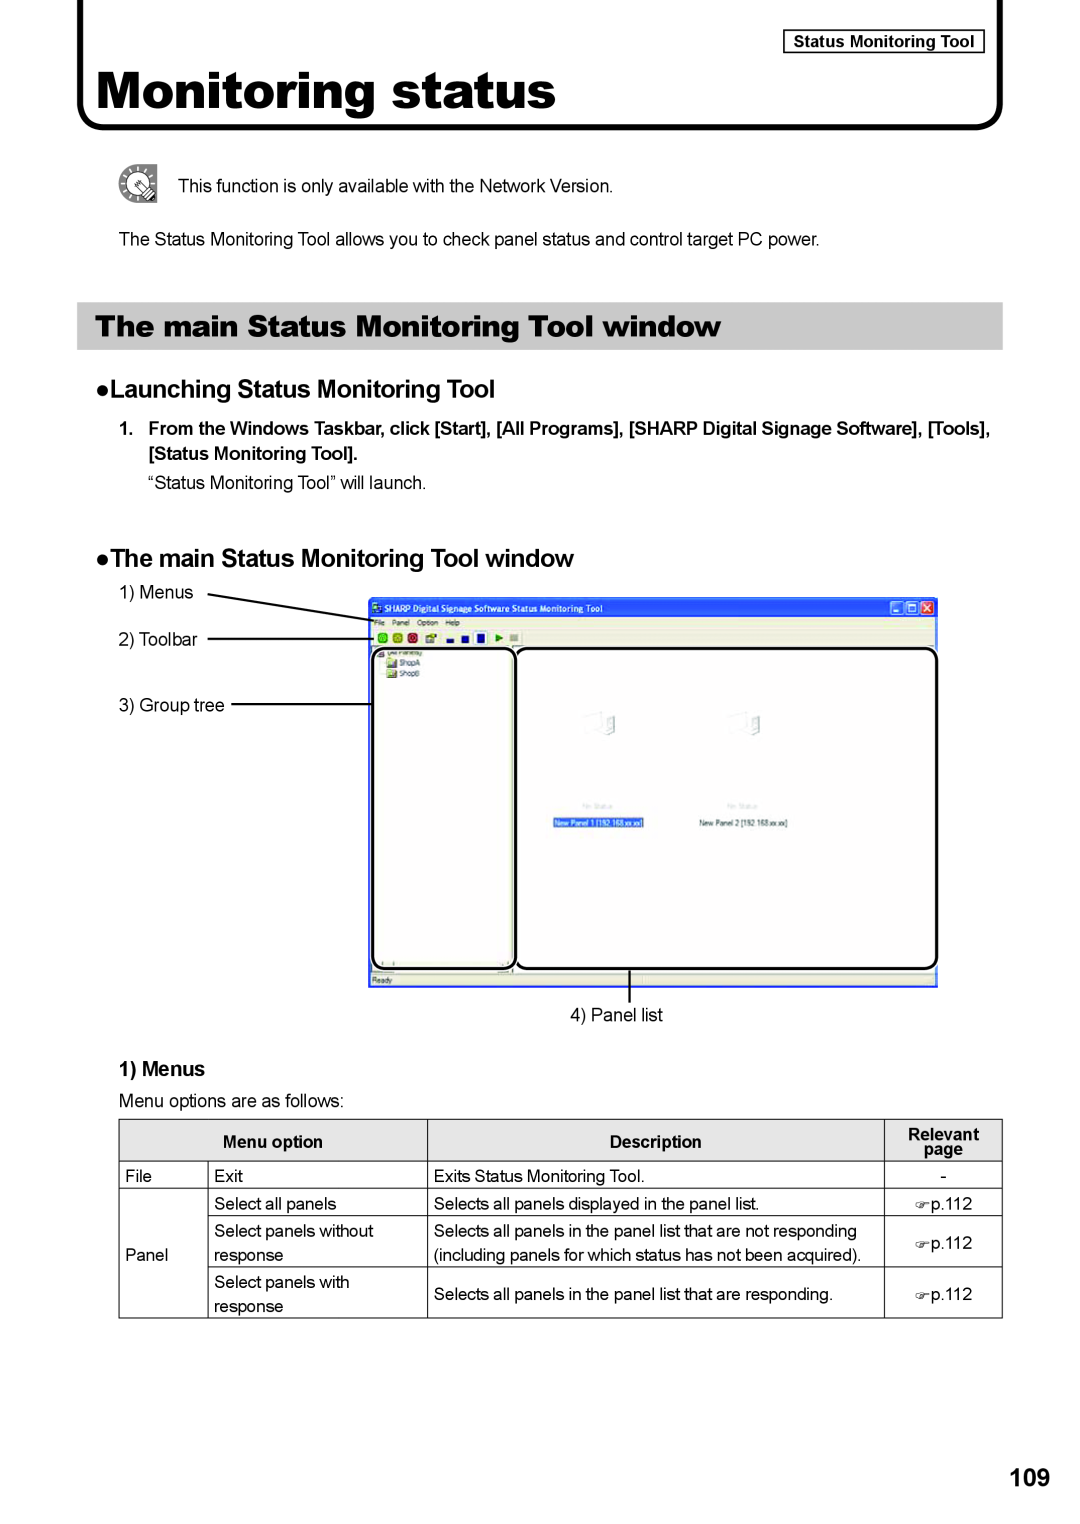 Sharp PNSV01 Monitoring status, The main Status Monitoring Tool window, Launching Status Monitoring Tool, Menus, Relevant 